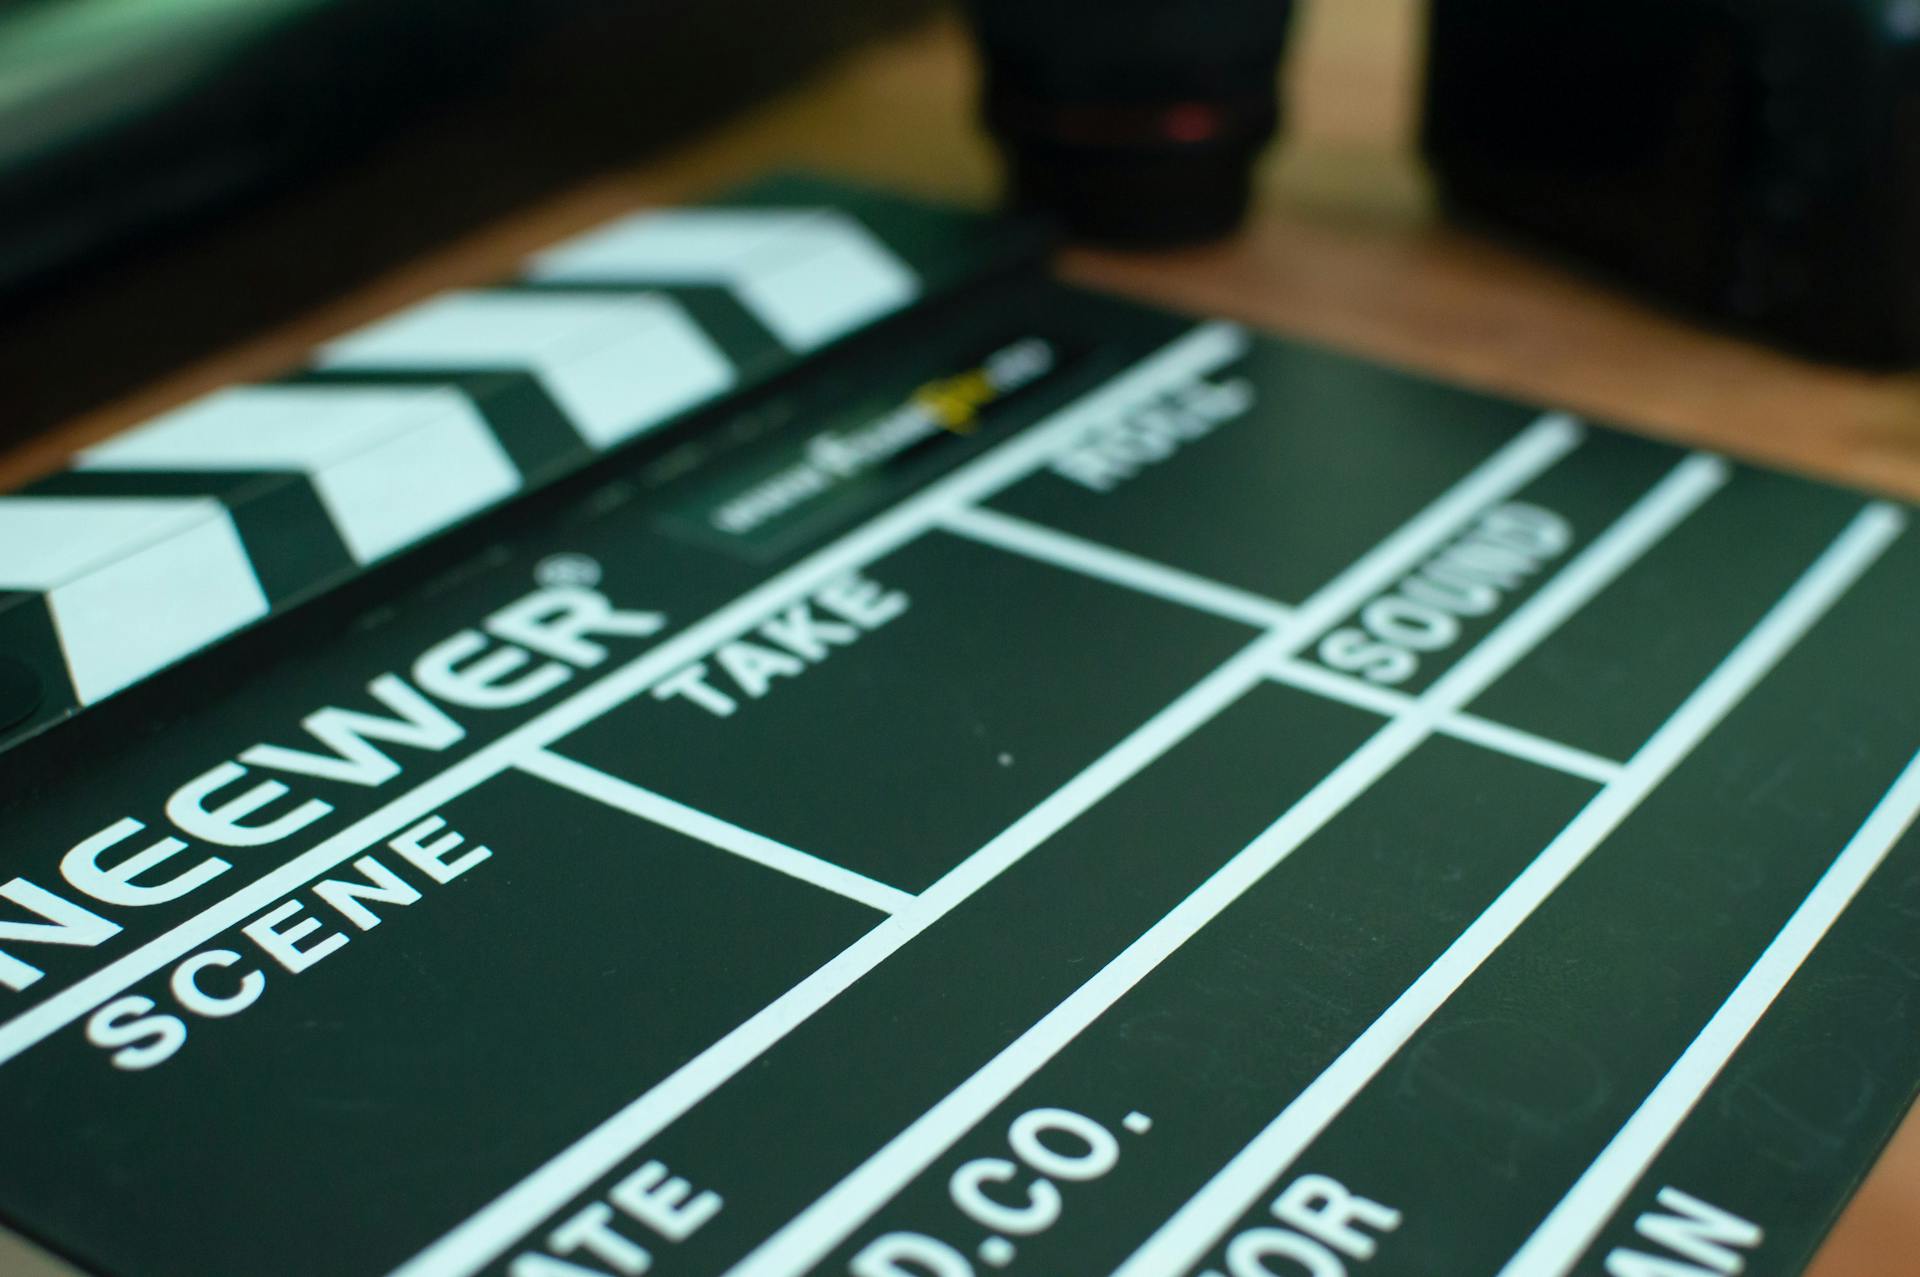 Film slate showing fields for Scene, Take, Sound. Optimize your videos on social media